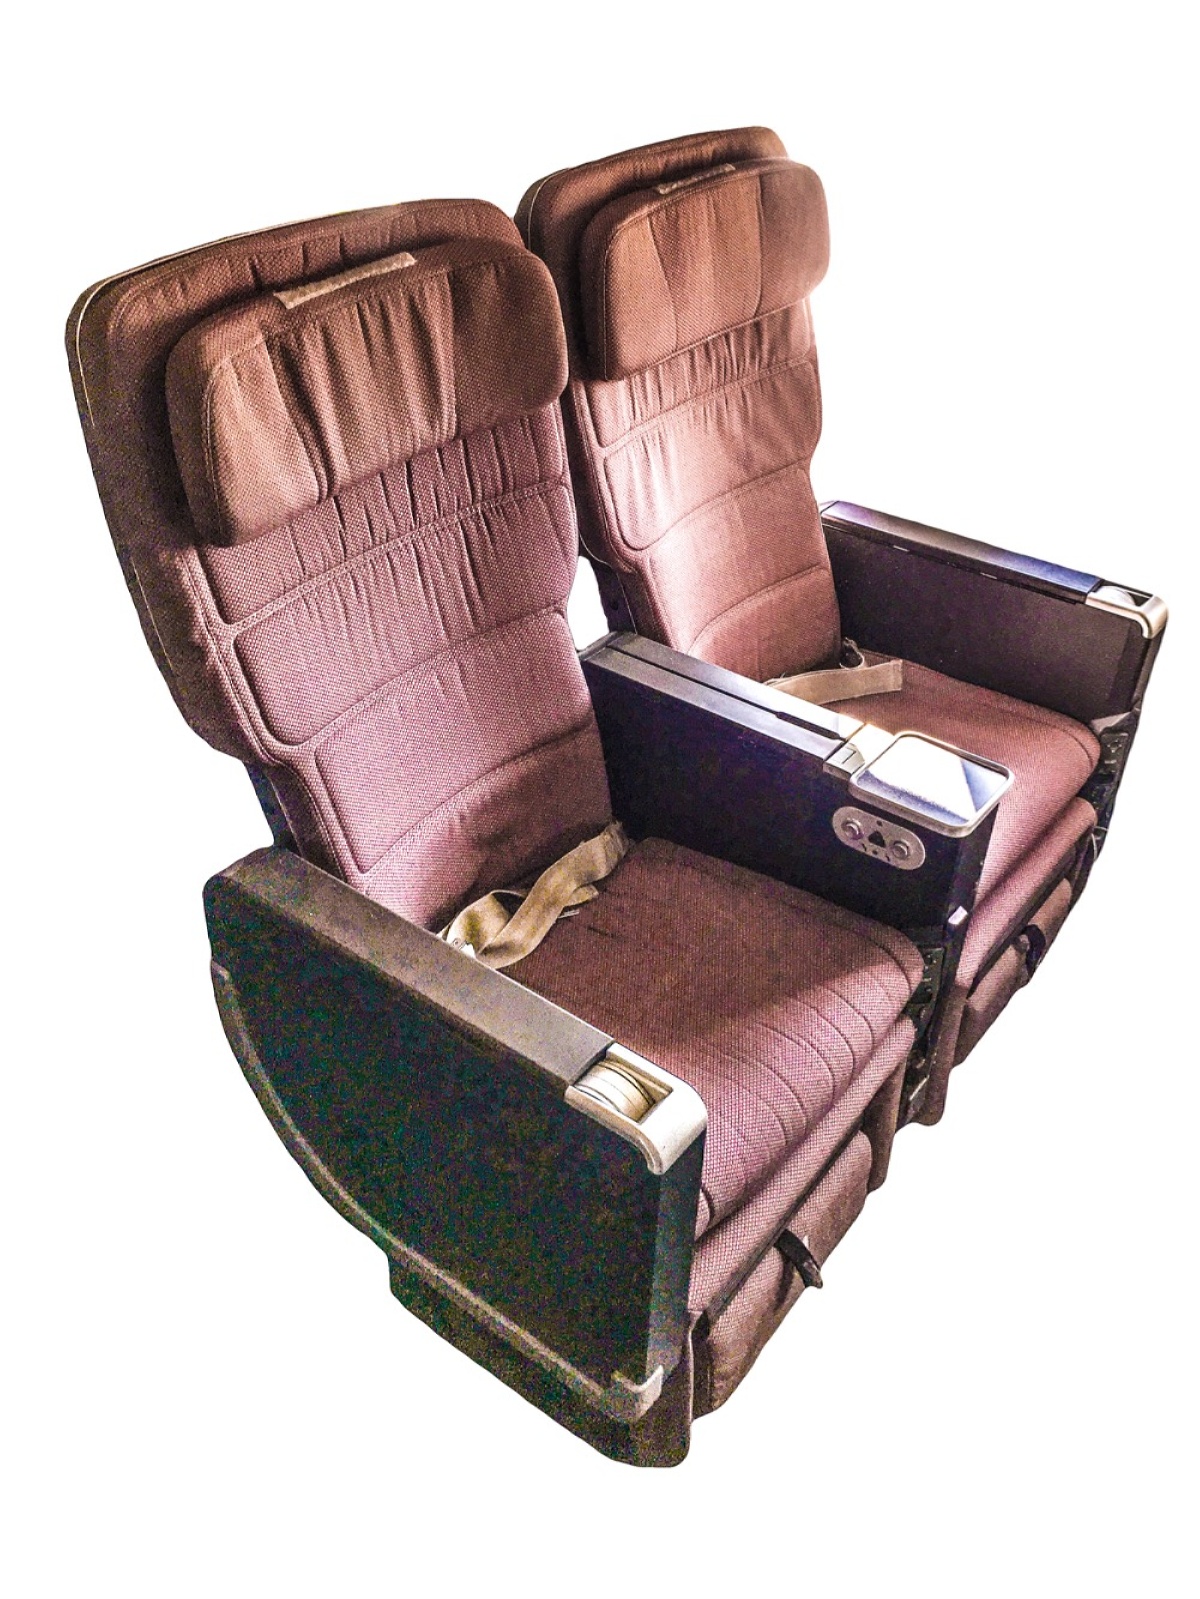 Qantas B747 400 Business Class Seats Front